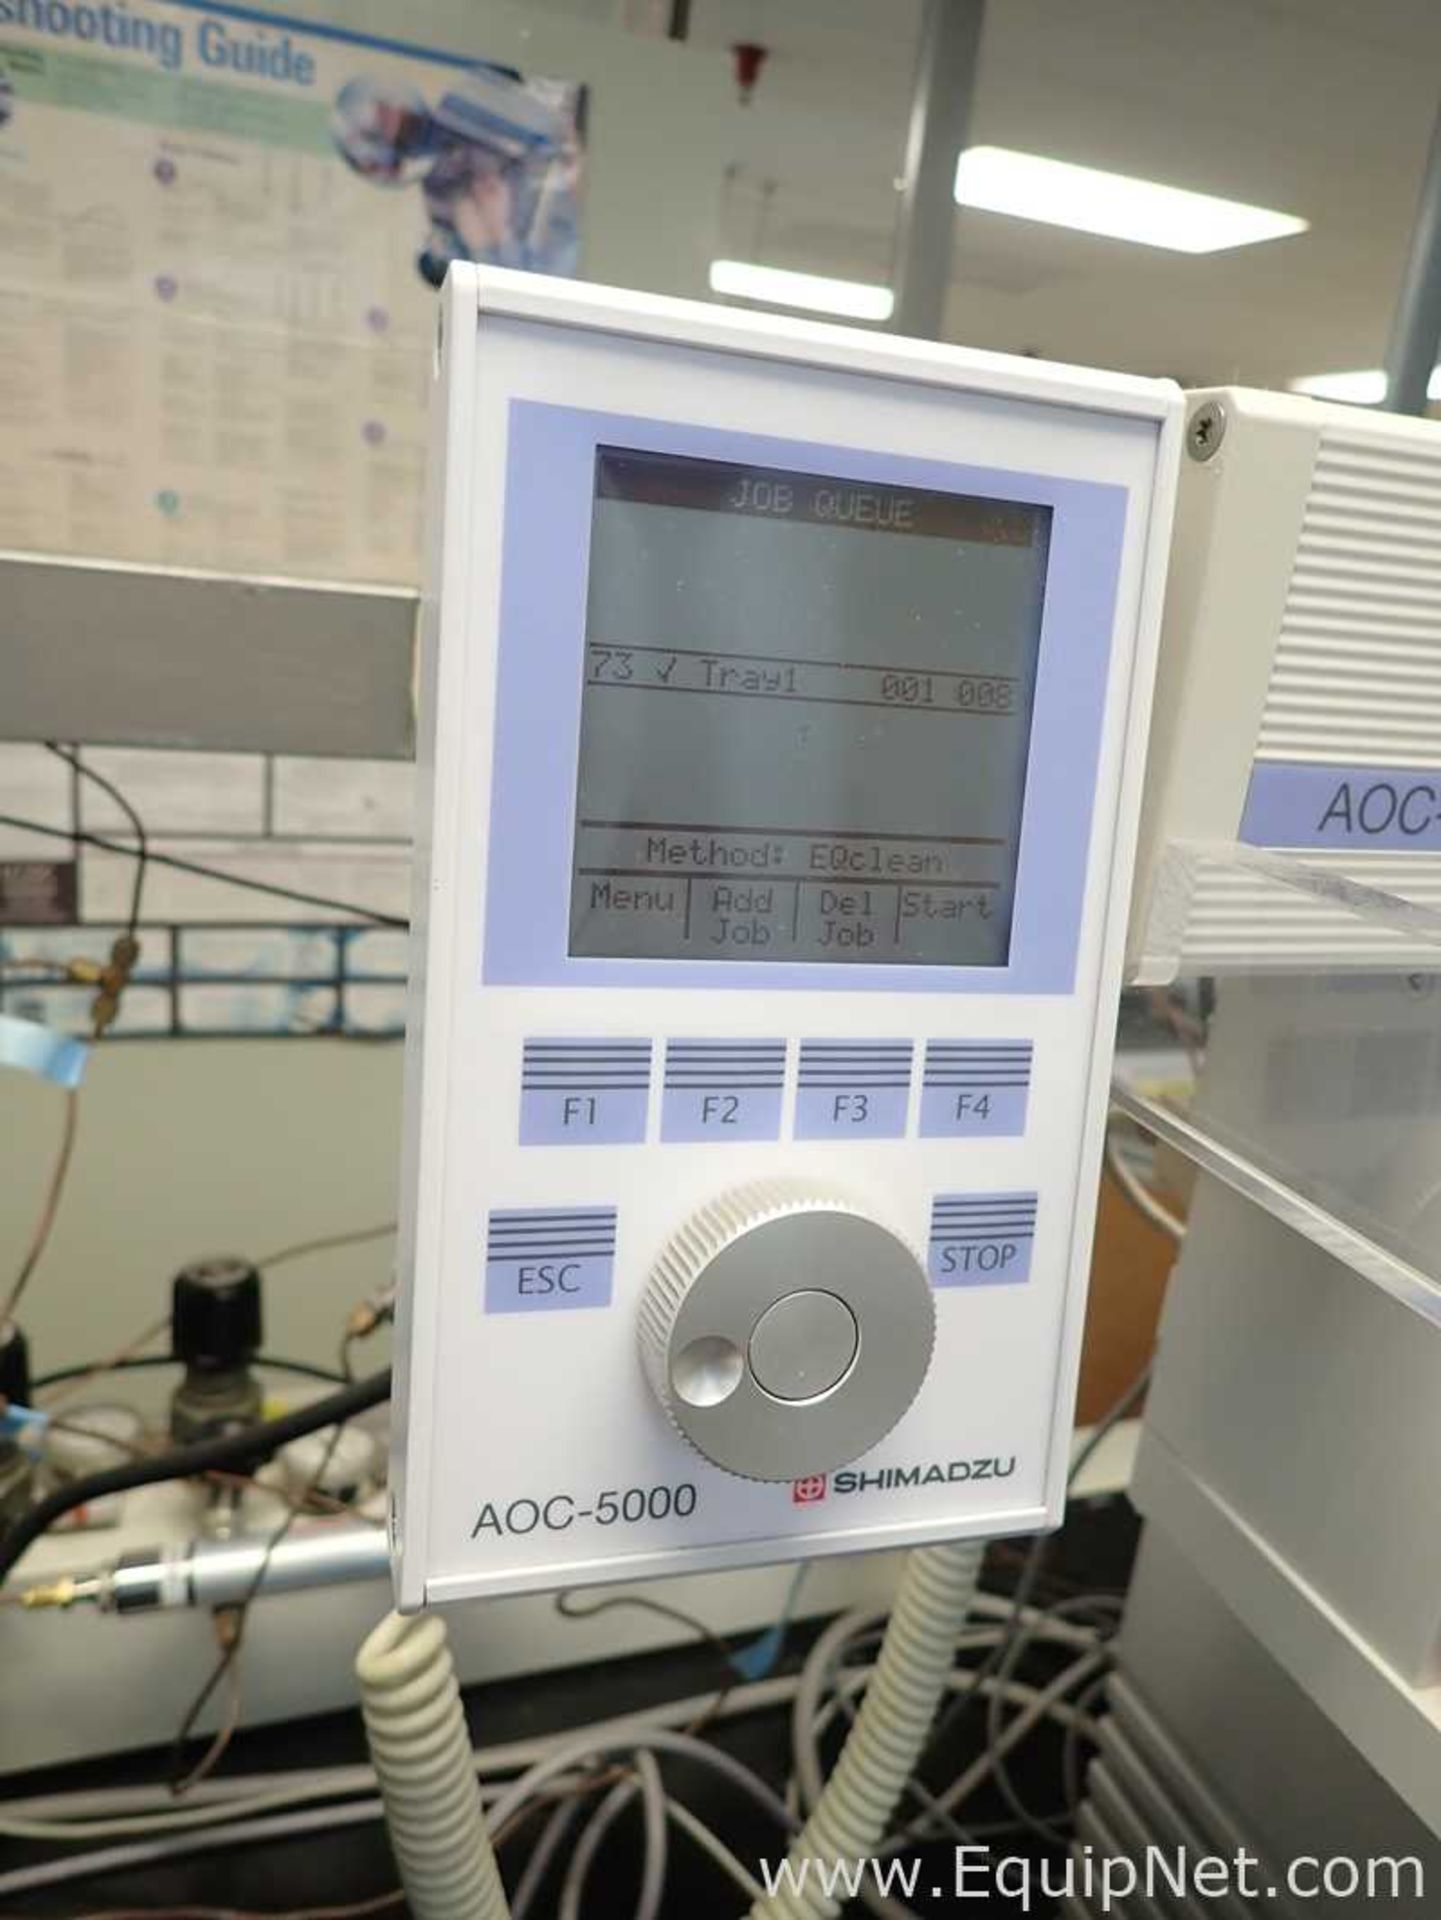 Shimadzu GC-2010 Gas Chromatograph with AOC-5000 Auto Injector - Image 8 of 8